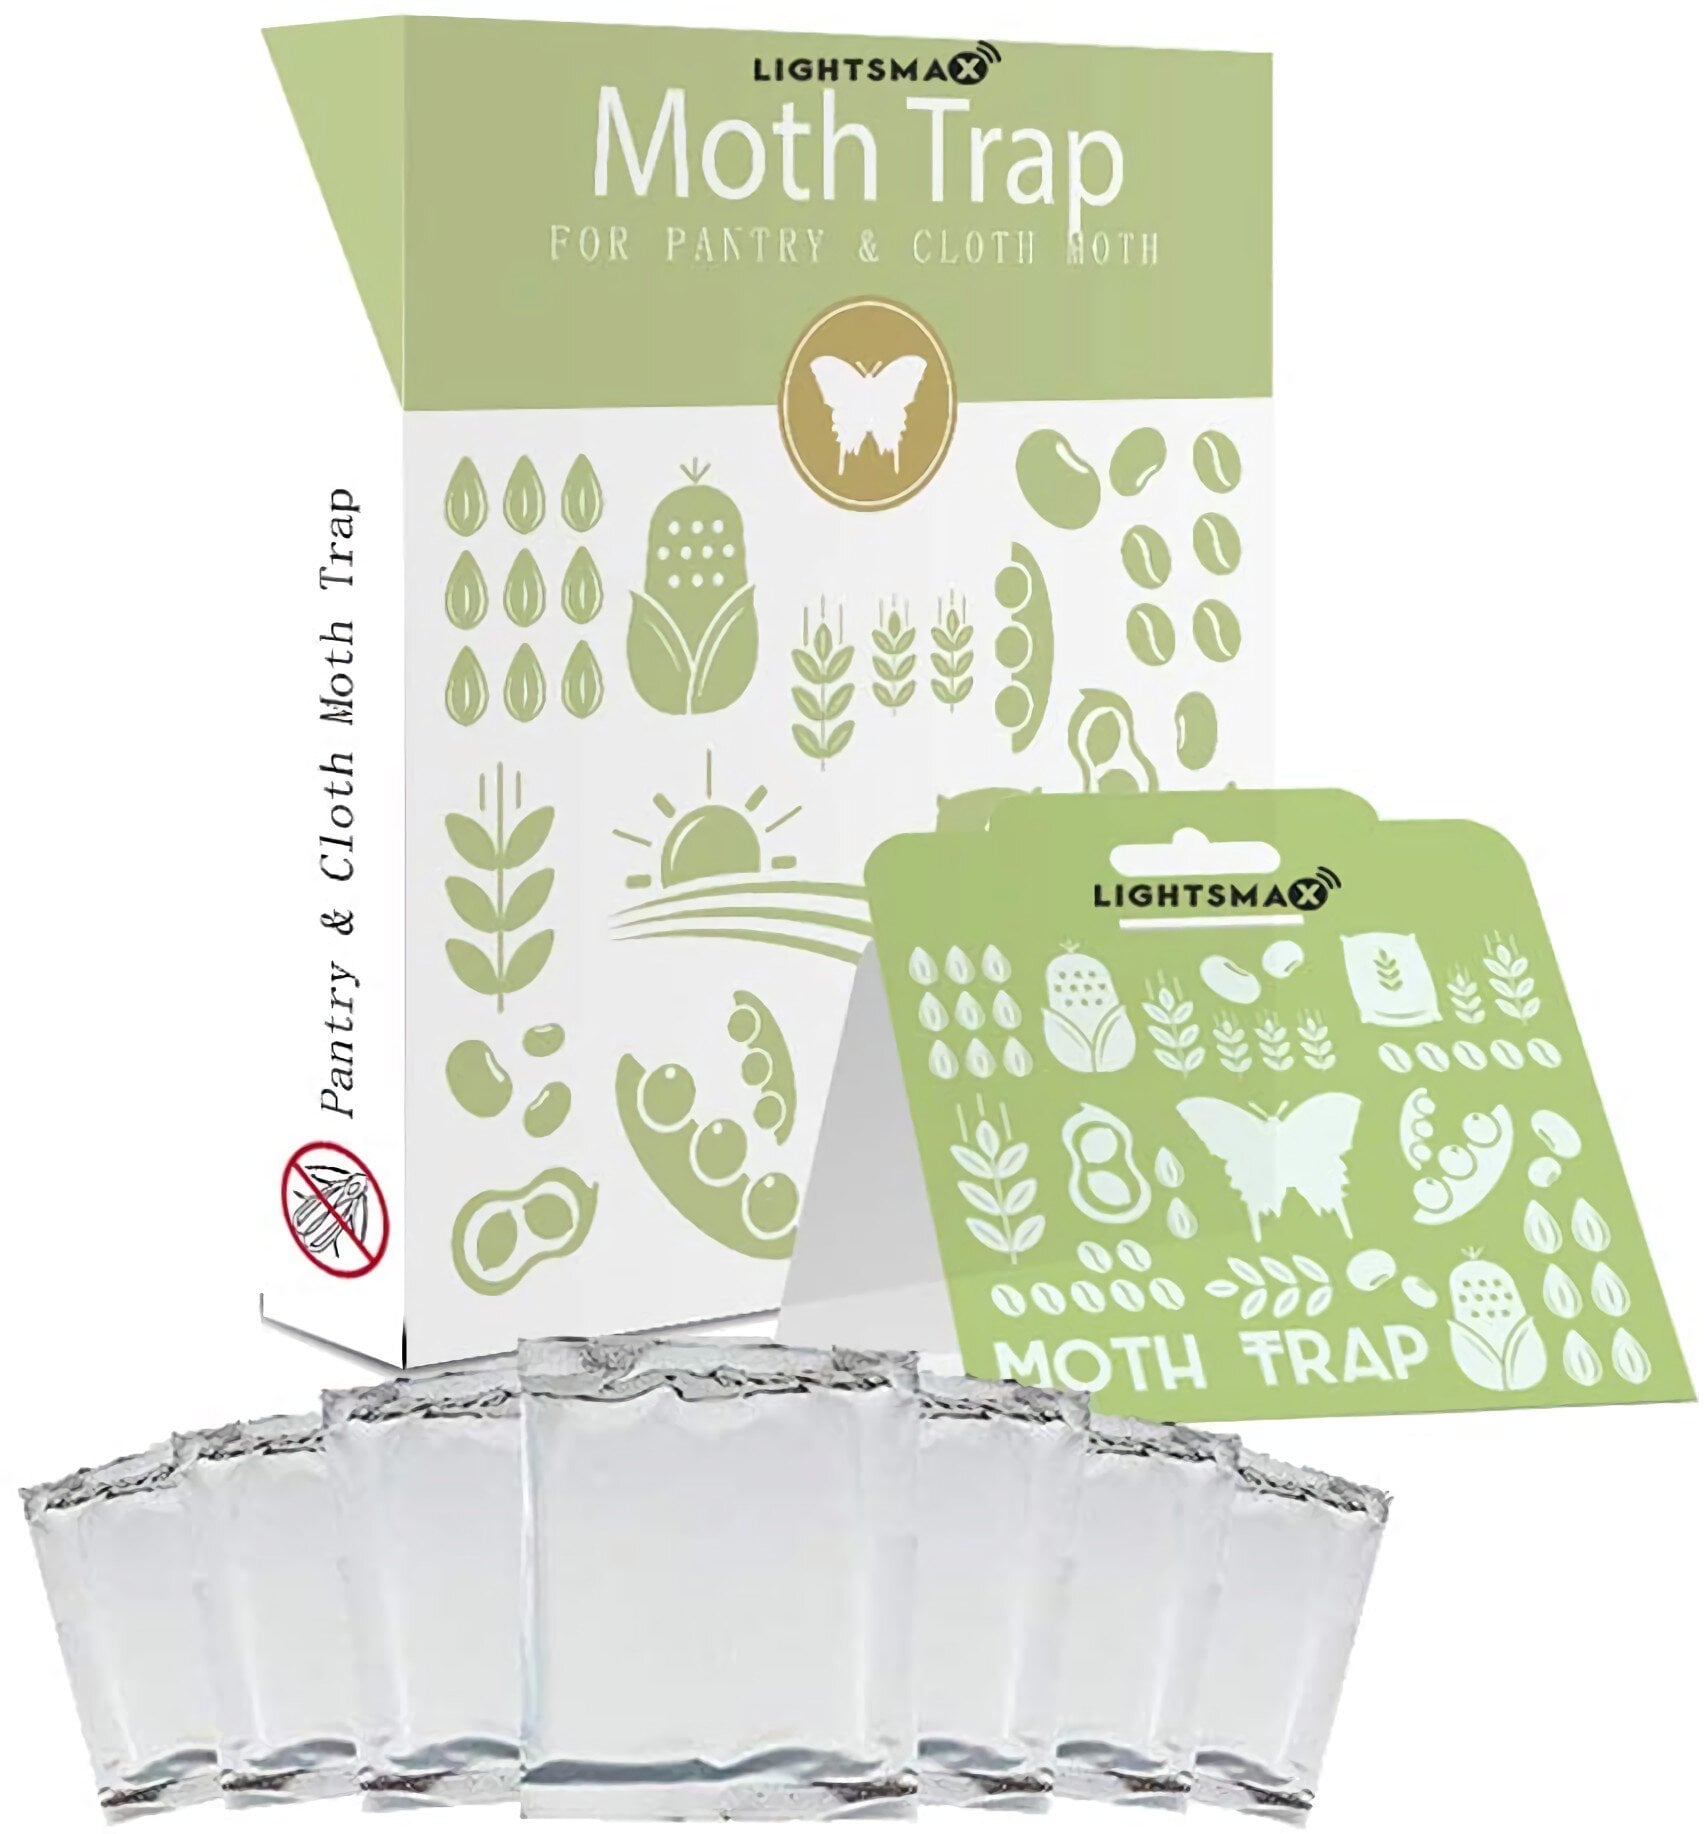 Biocare Flour & Pantry Moth Traps